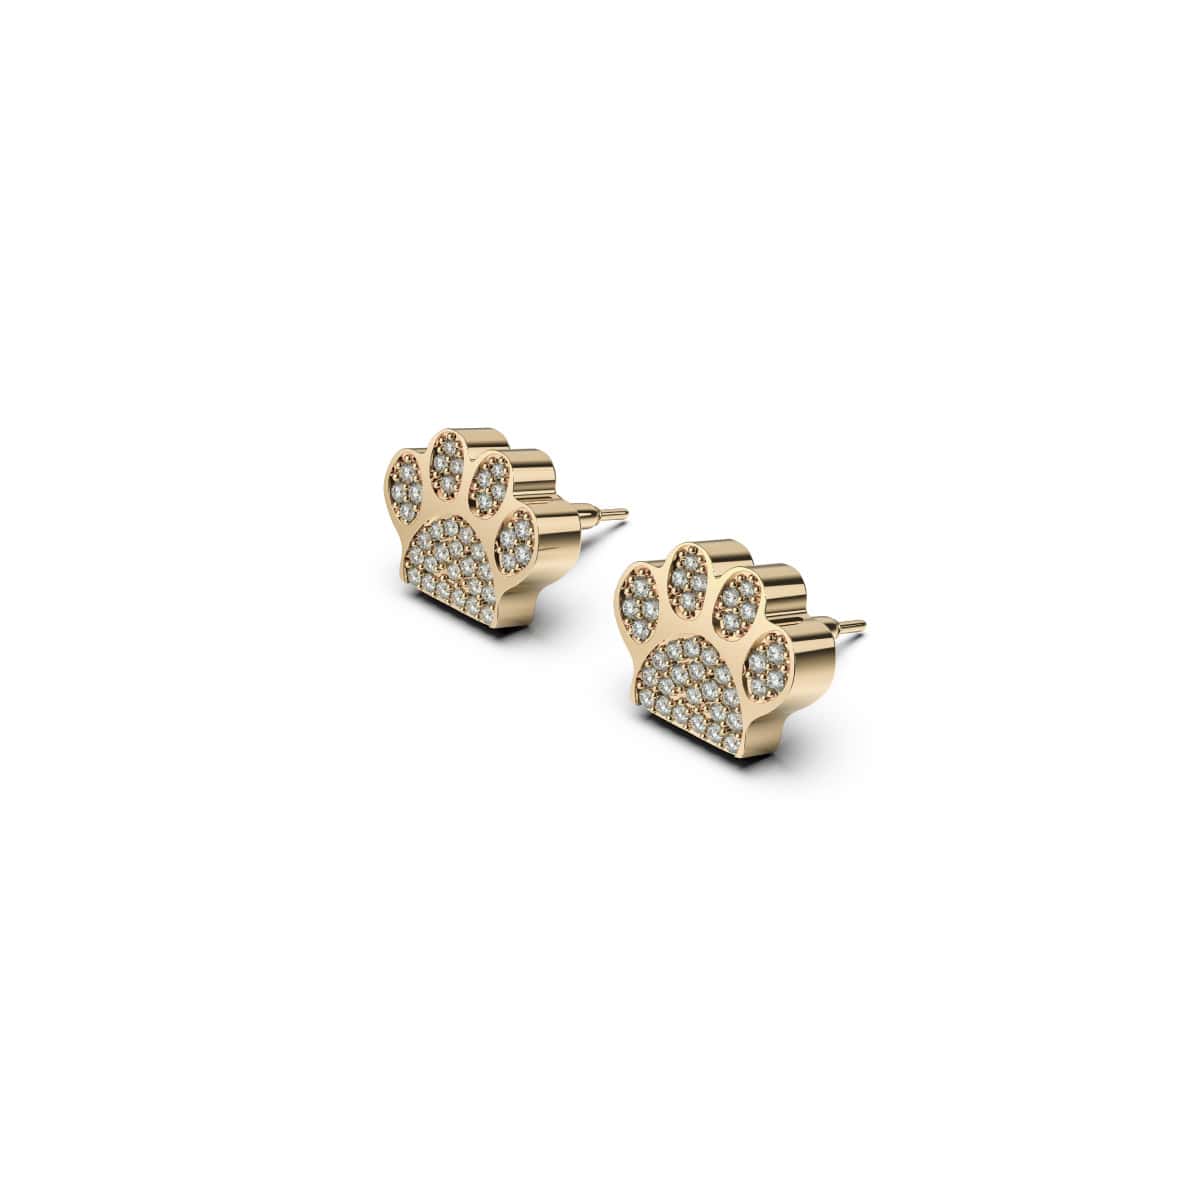 Paw | 18k Gold Vermeil | .925 Sterling Silver | Cubic Zirconia Crystal Pup Print Earrings